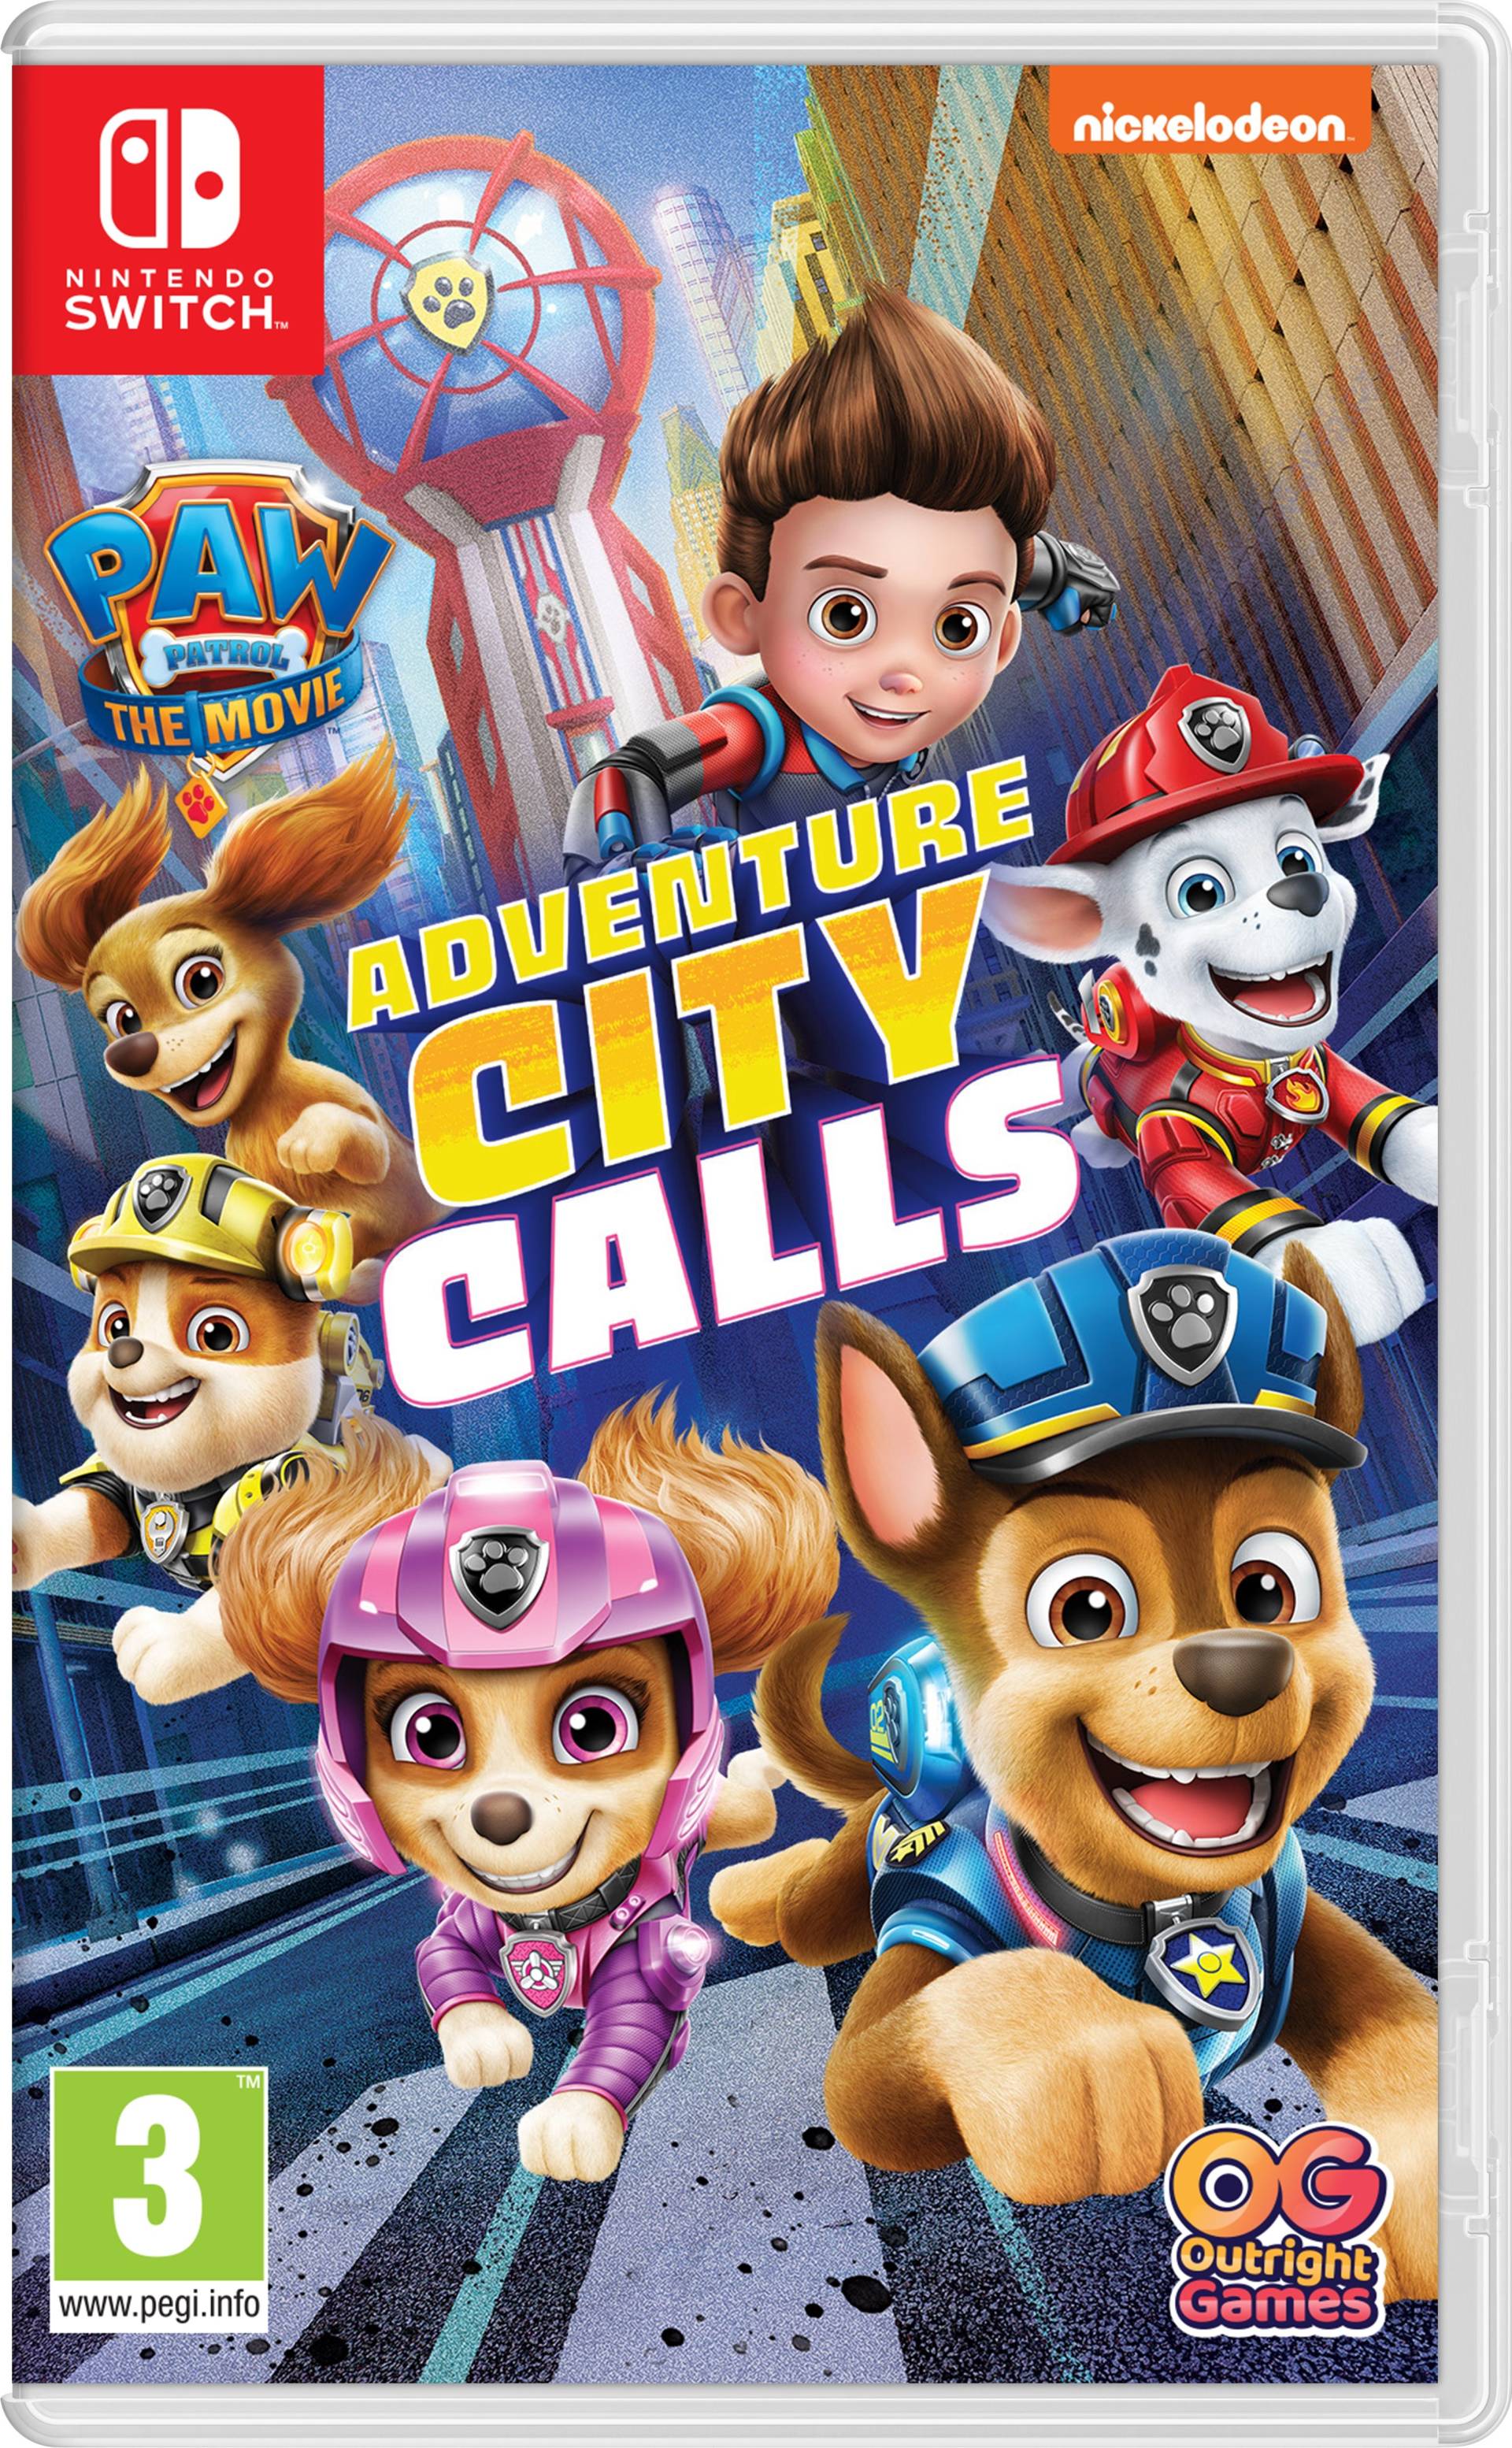 PAW Patrol The Movie Adventure City Calls von Outright Games